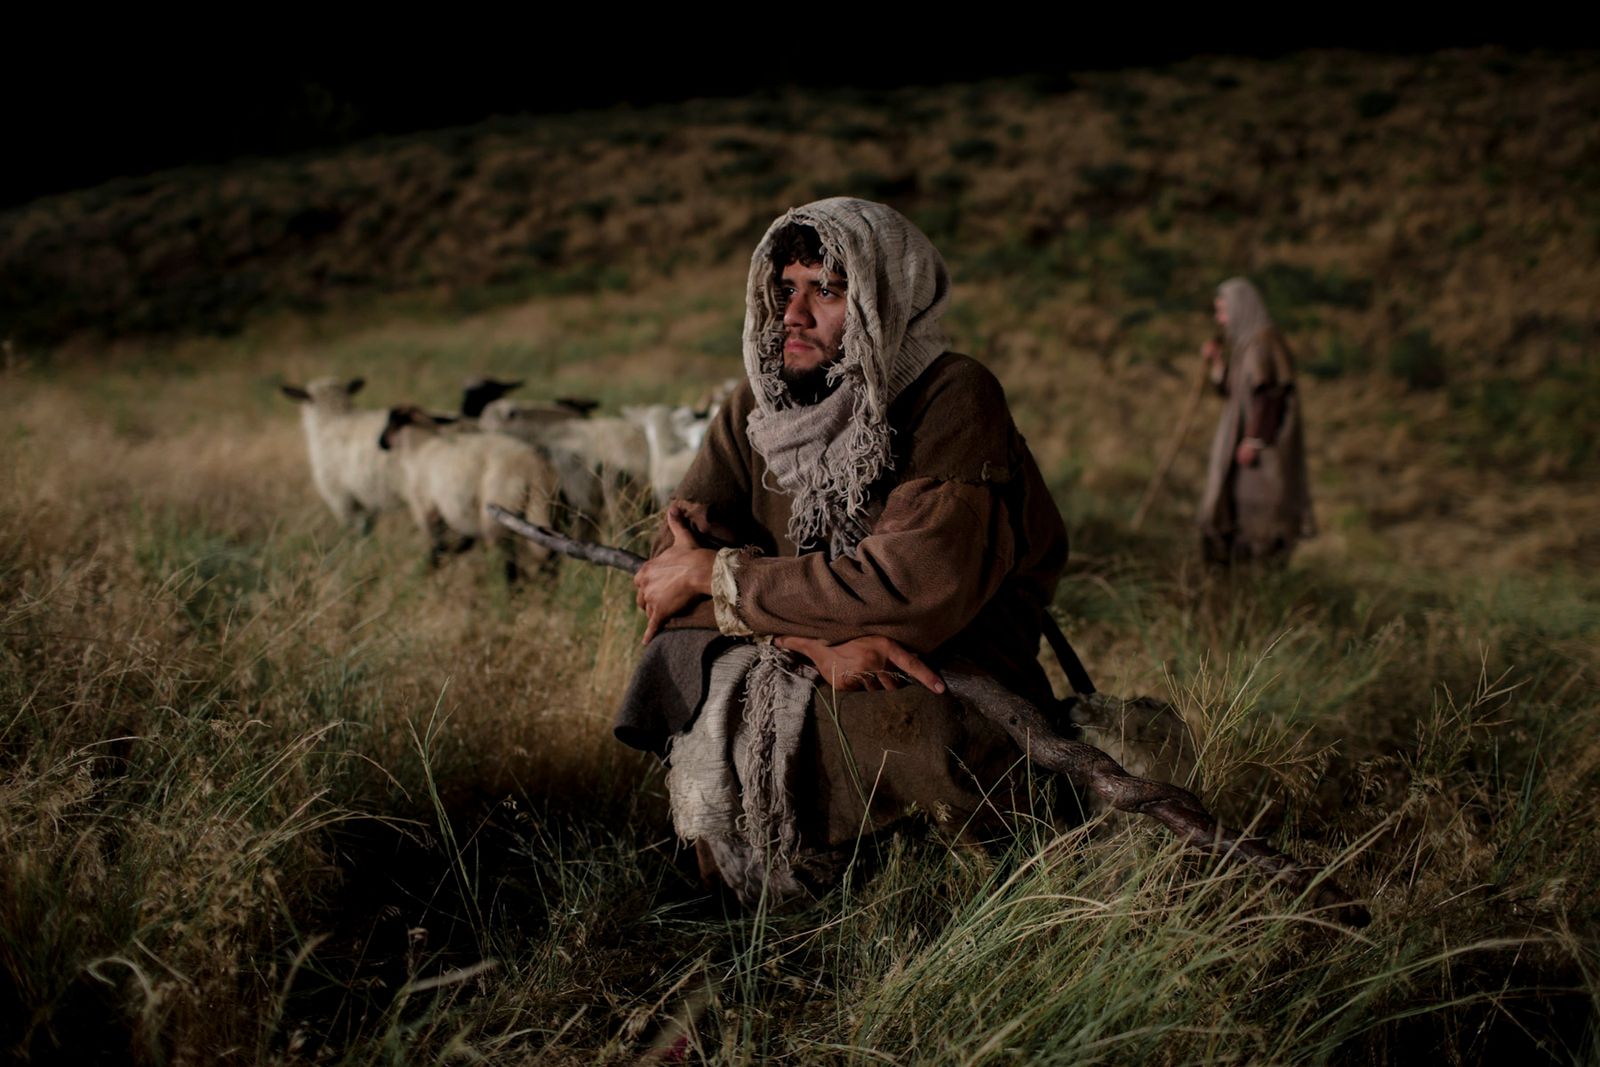 Shepherds watch their flocks at night.